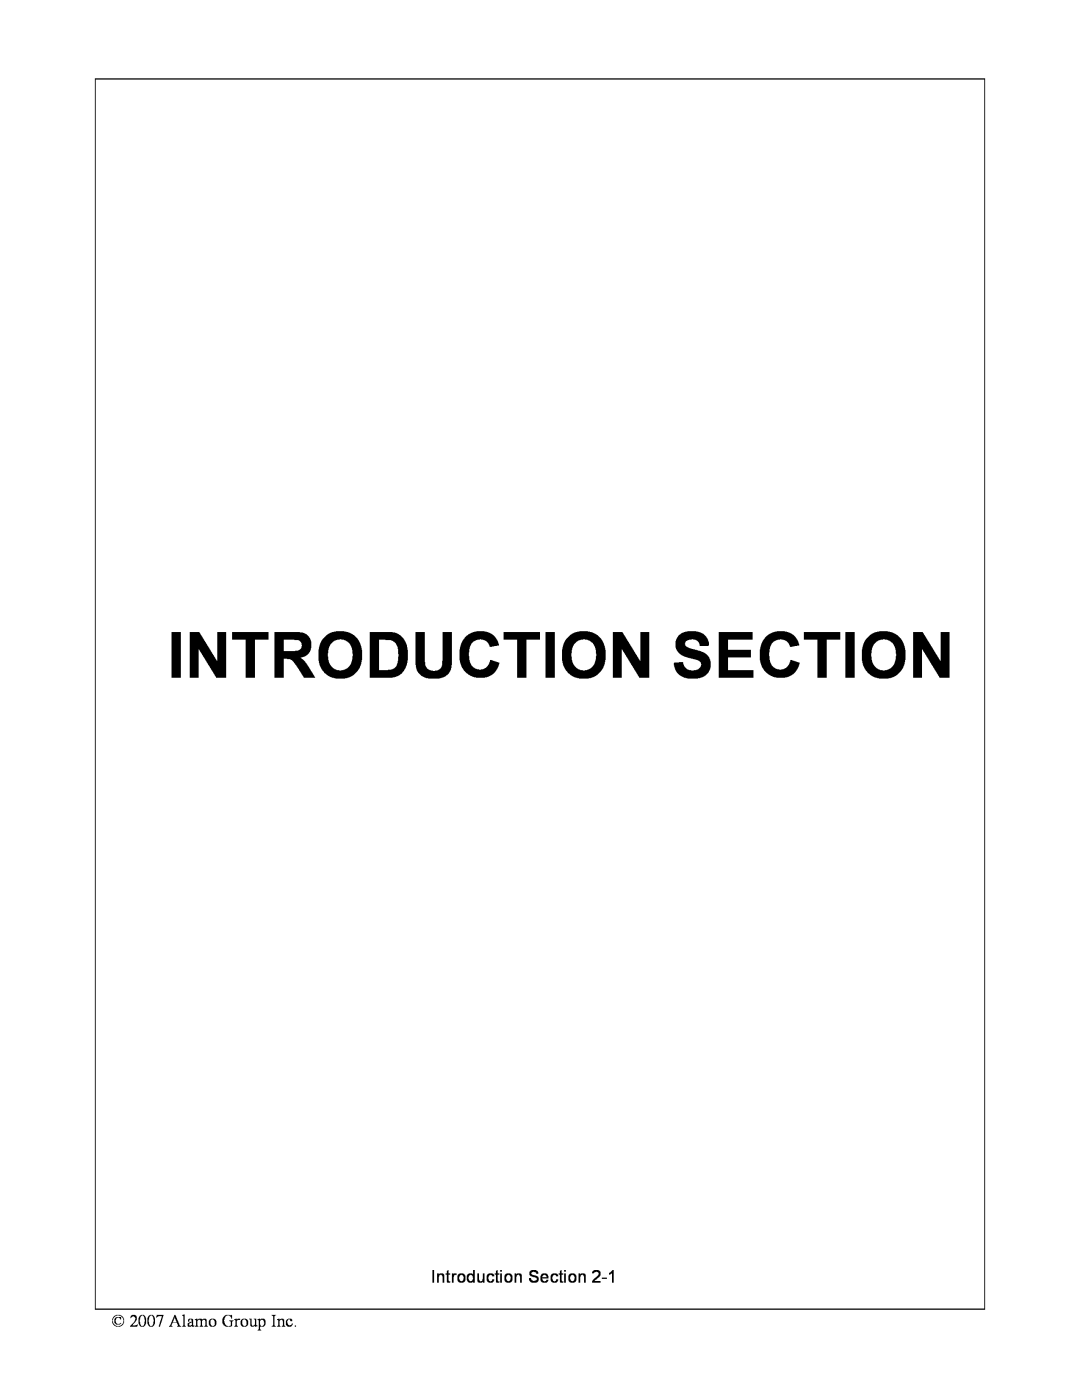 Alamo TX235 manual Introduction Section 